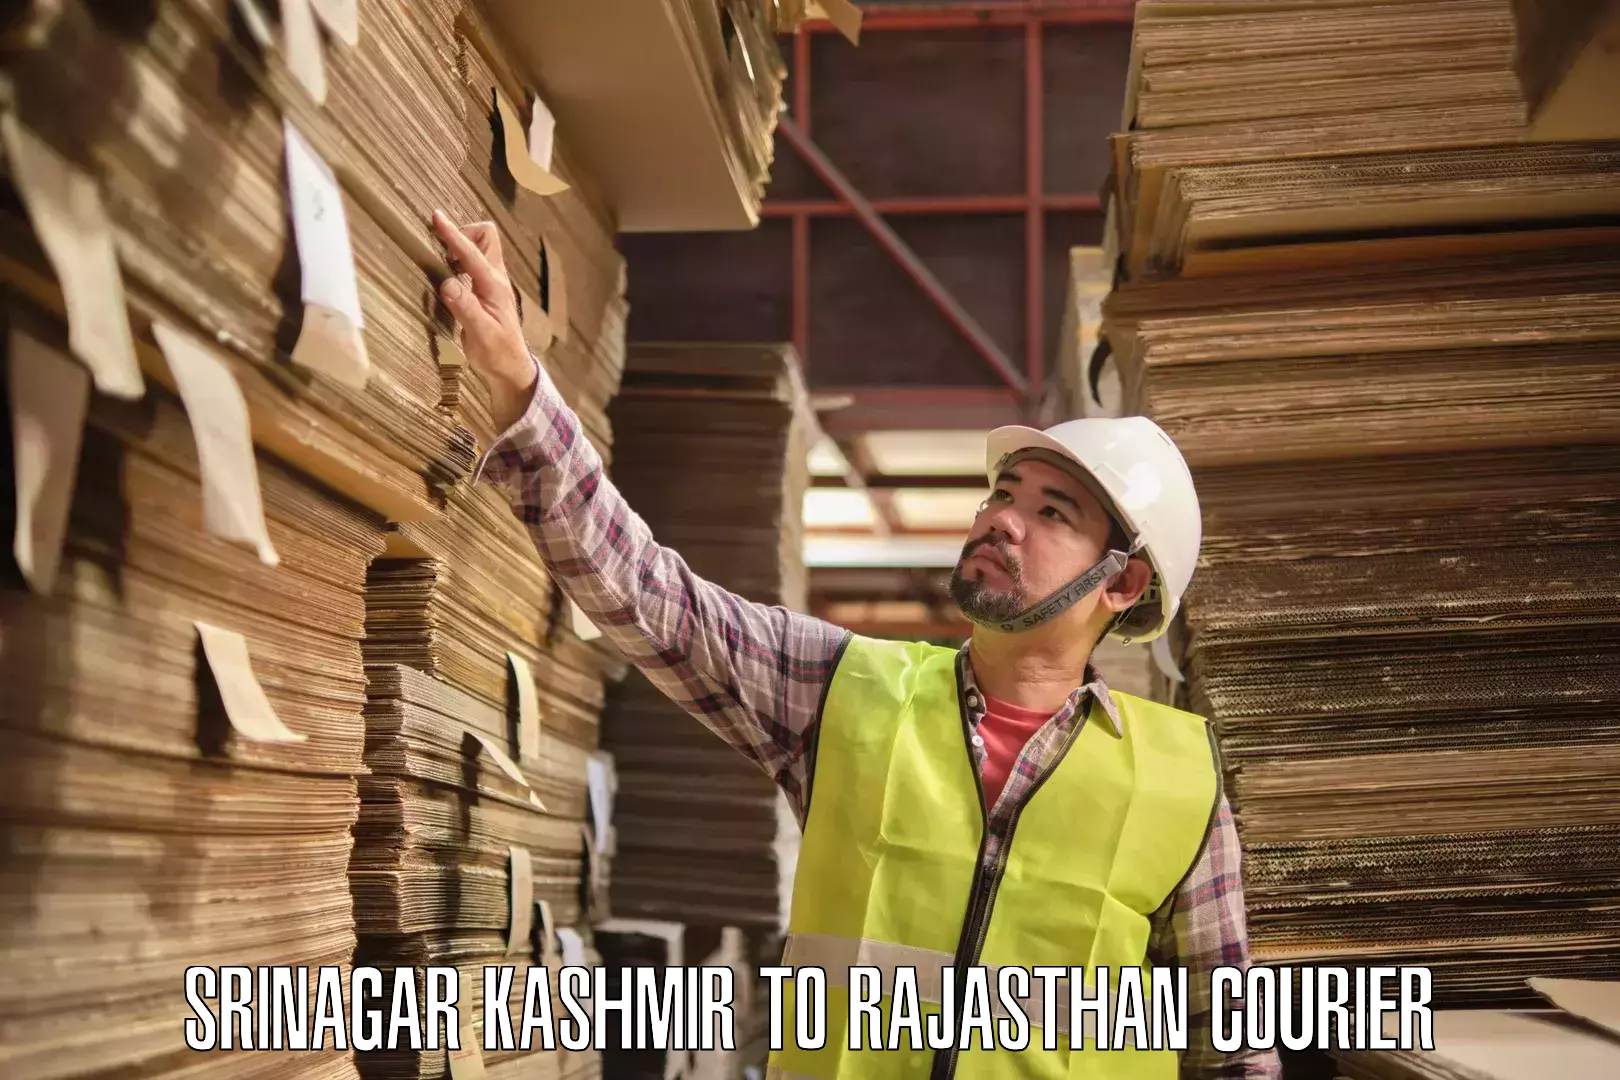 Reliable freight solutions Srinagar Kashmir to Jaipur